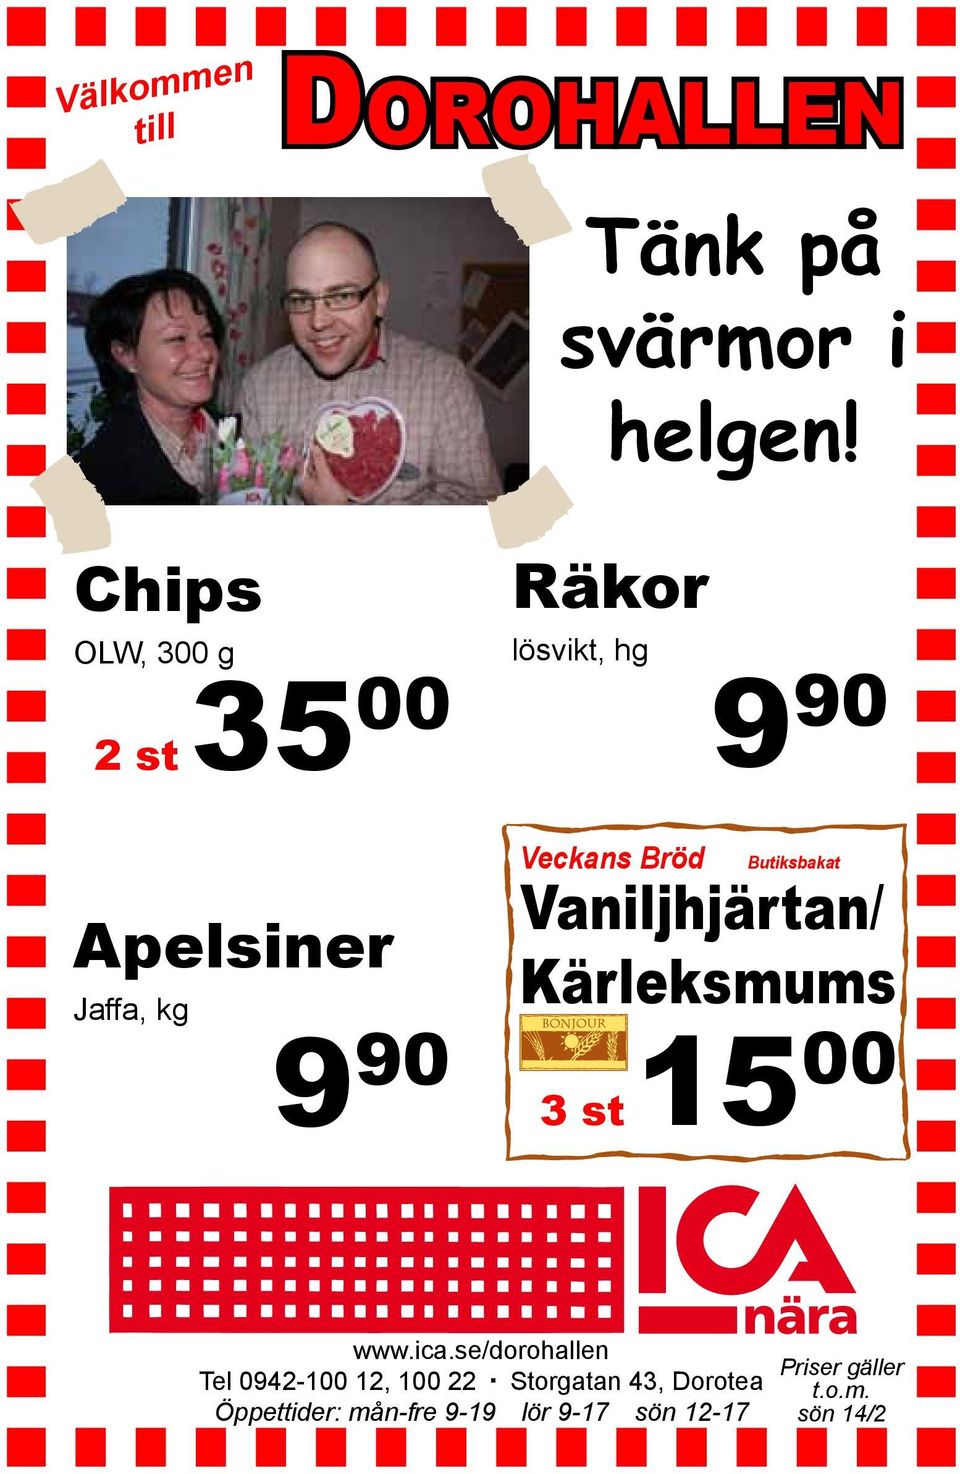 9 90 Butiksbakat Vaniljhjärtan/ Kärleksmums 3 st 15 00 www.ica.